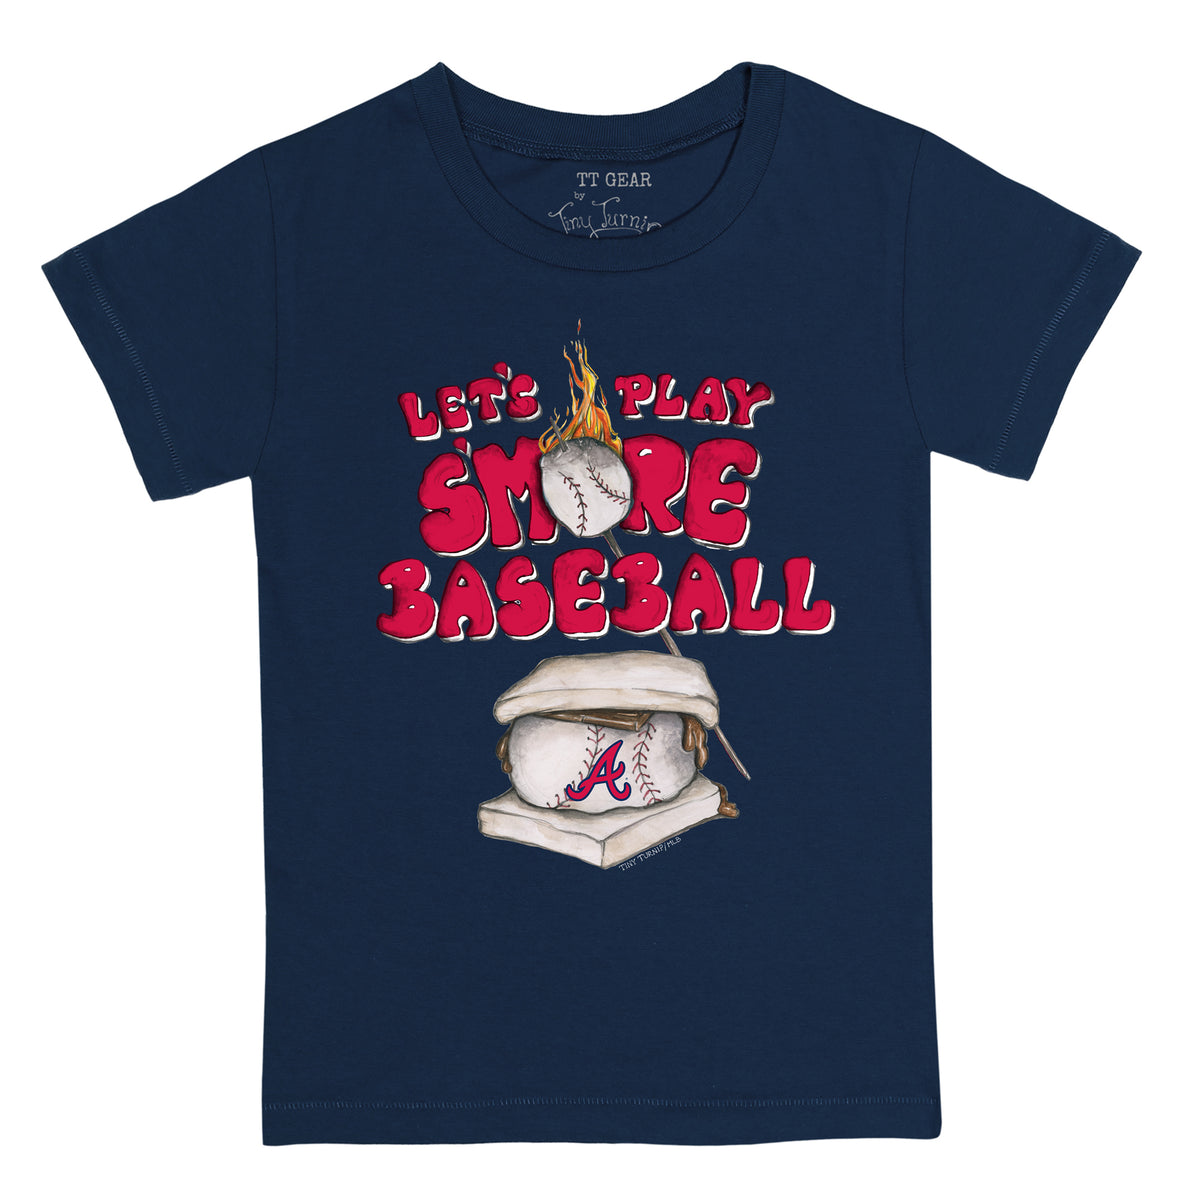 Toddler Tiny Turnip White Atlanta Braves Stitched Baseball T-Shirt Size:3T